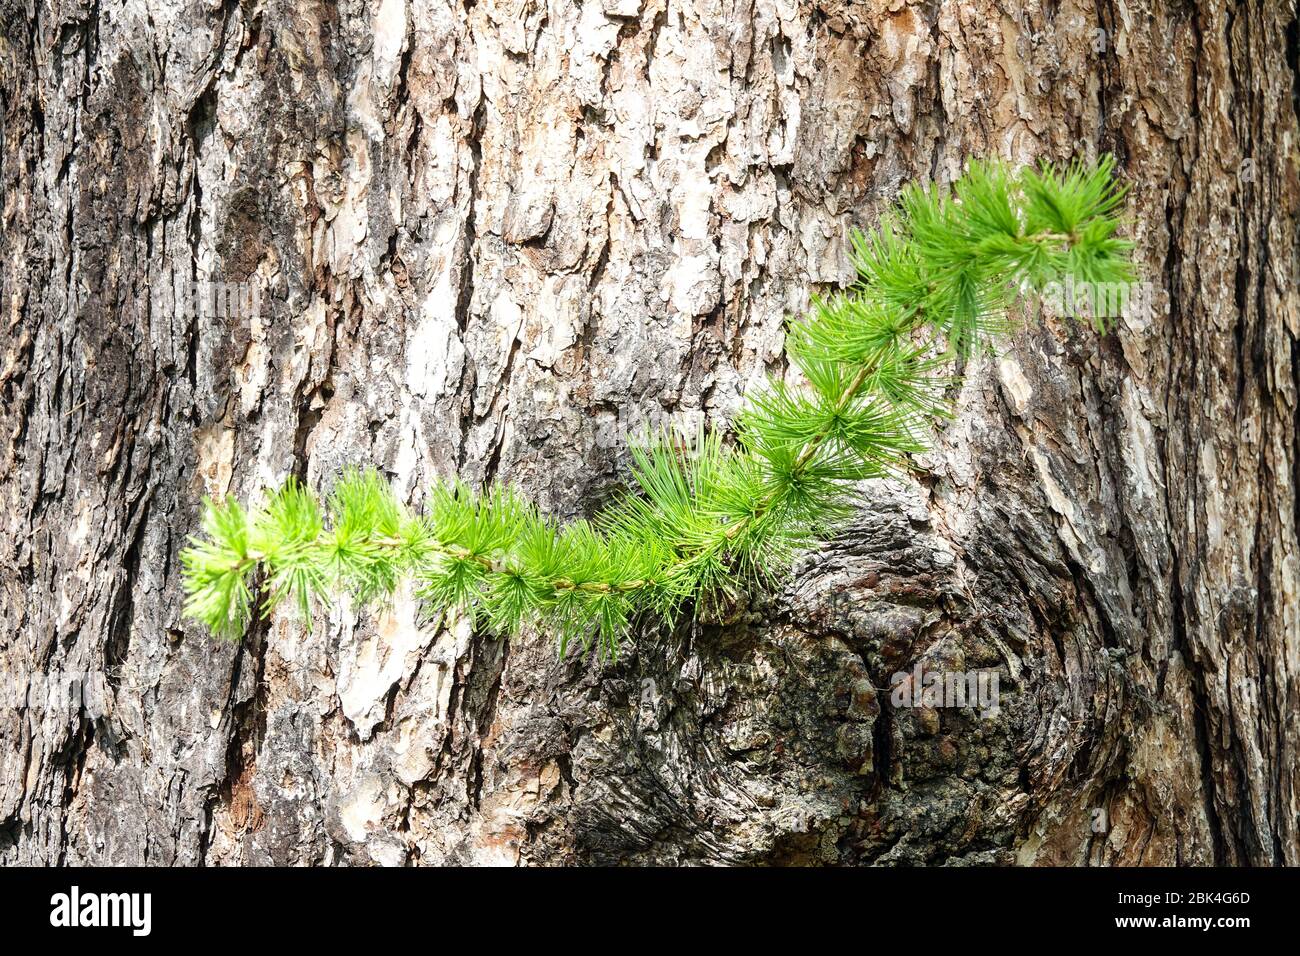 Larix decidua European larch, young needles on a twig, tree bark texture, shoots trunk tree shoots Stock Photo